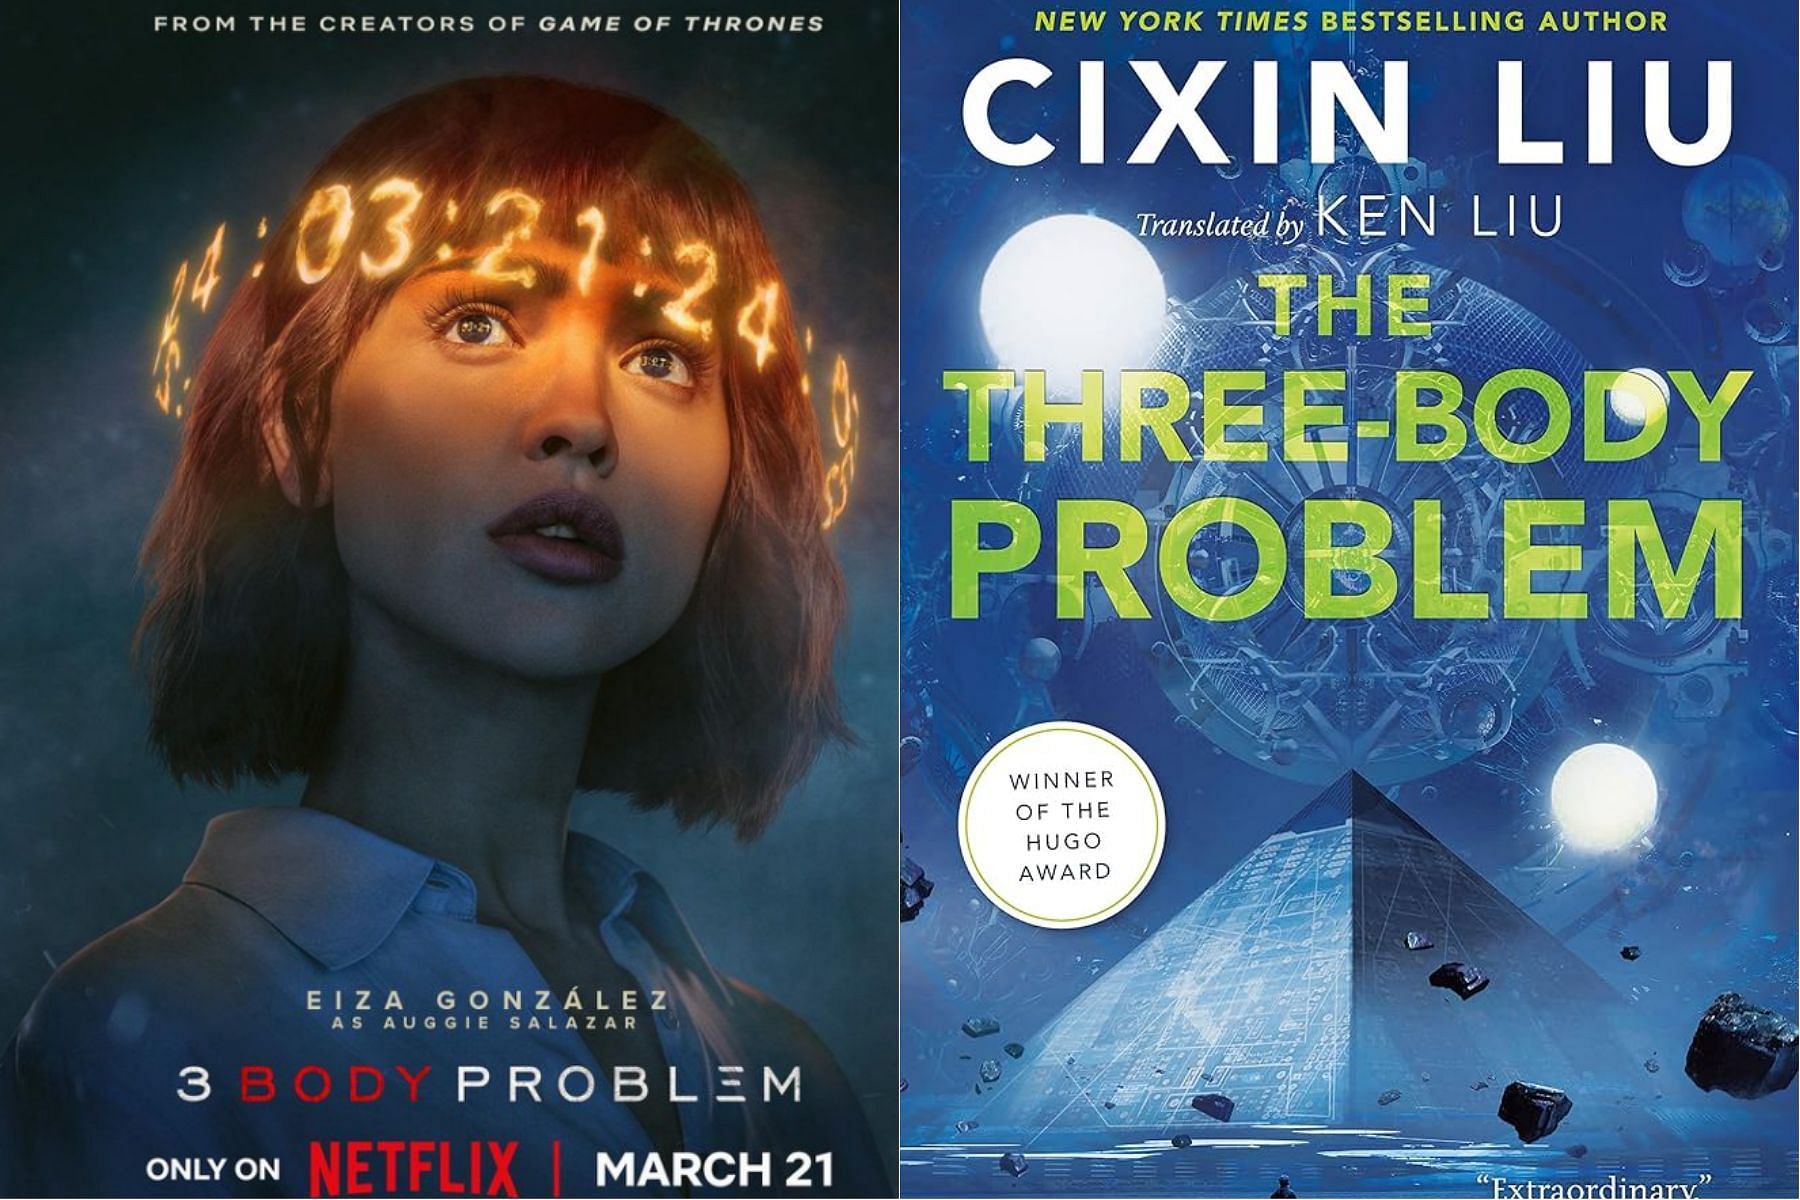 3 Body Problem Official poster &amp; Book (Iages via Left: Instagram @3bodyproblem &amp; Right: Google Books Licenced Copy)